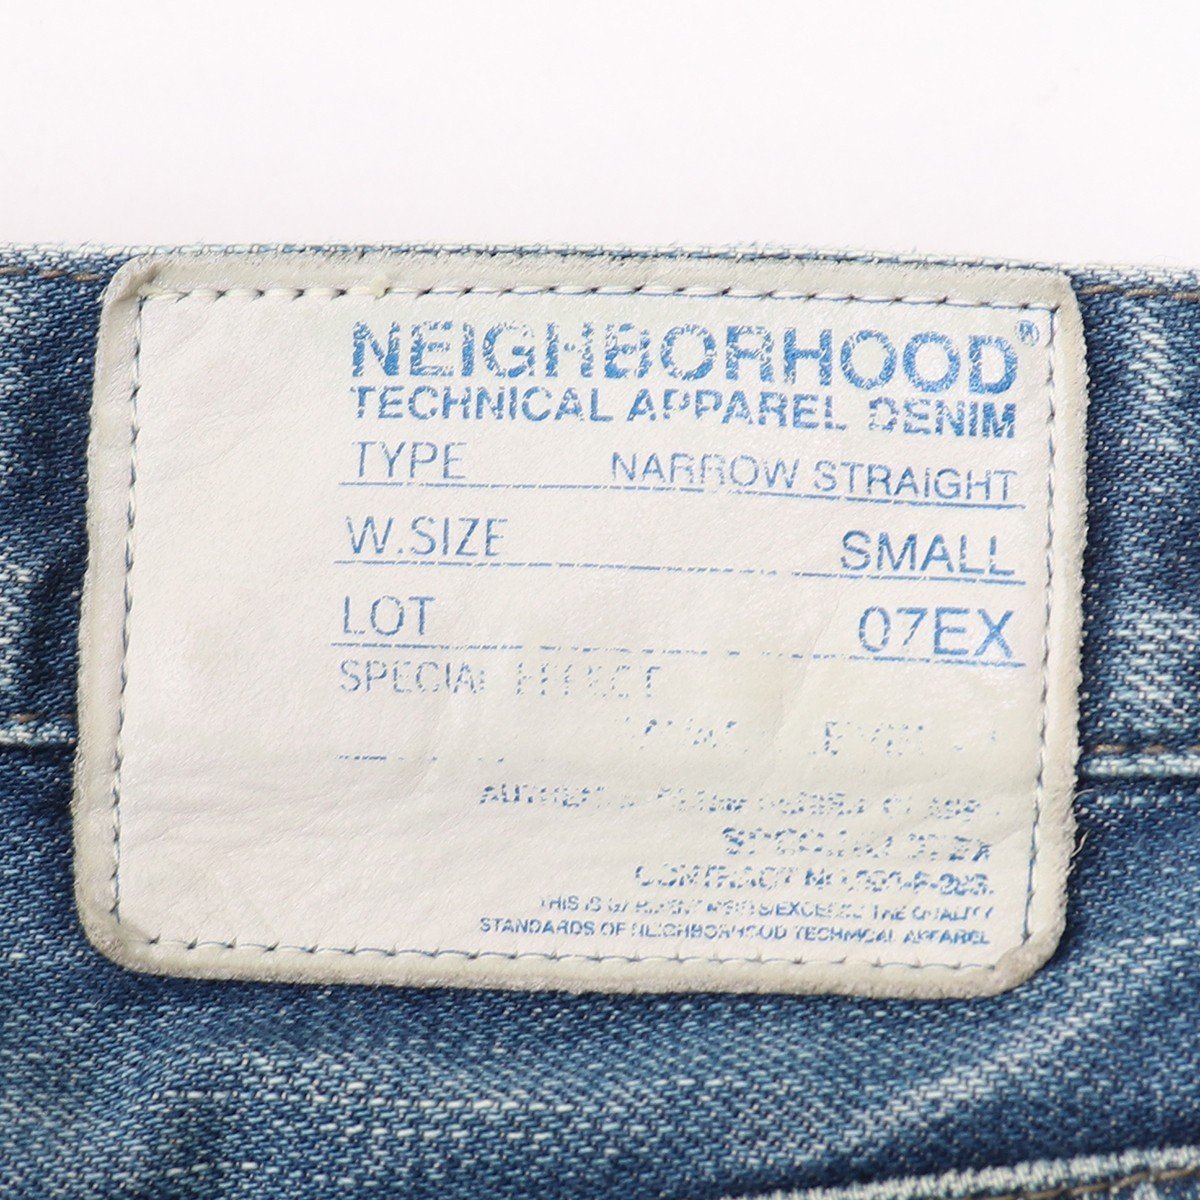  Neighborhood NEIGHBORHOOD распорка Denim брюки джинсы S индиго EE771 /X